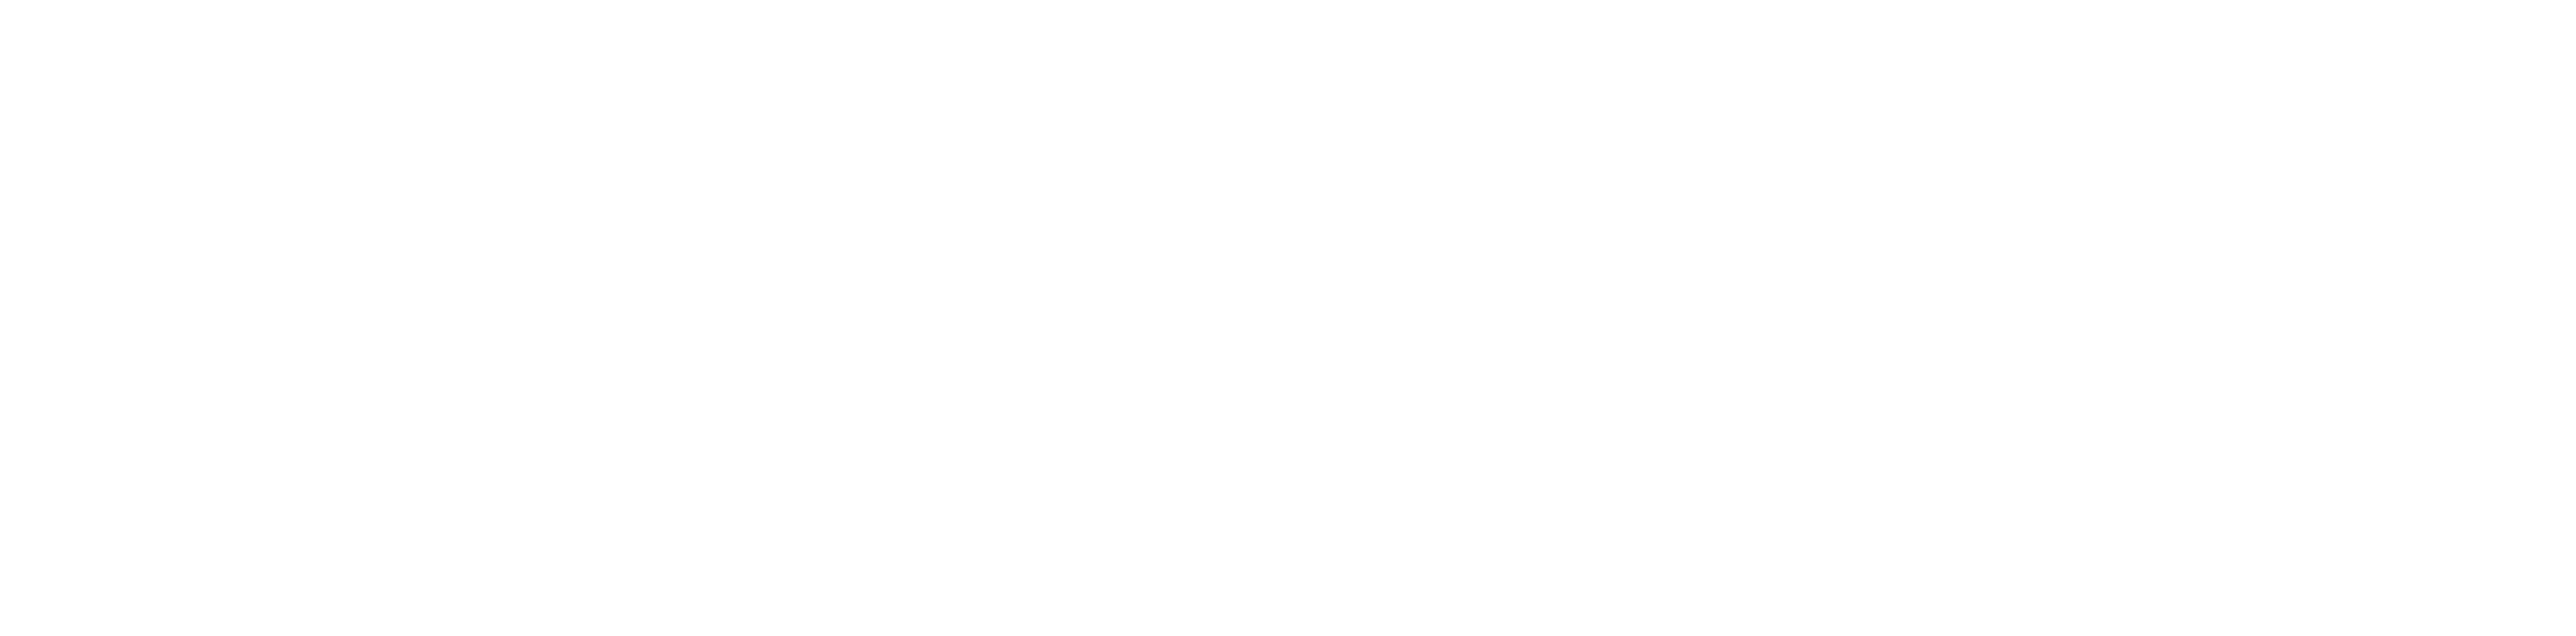 iMedic Congress 2019